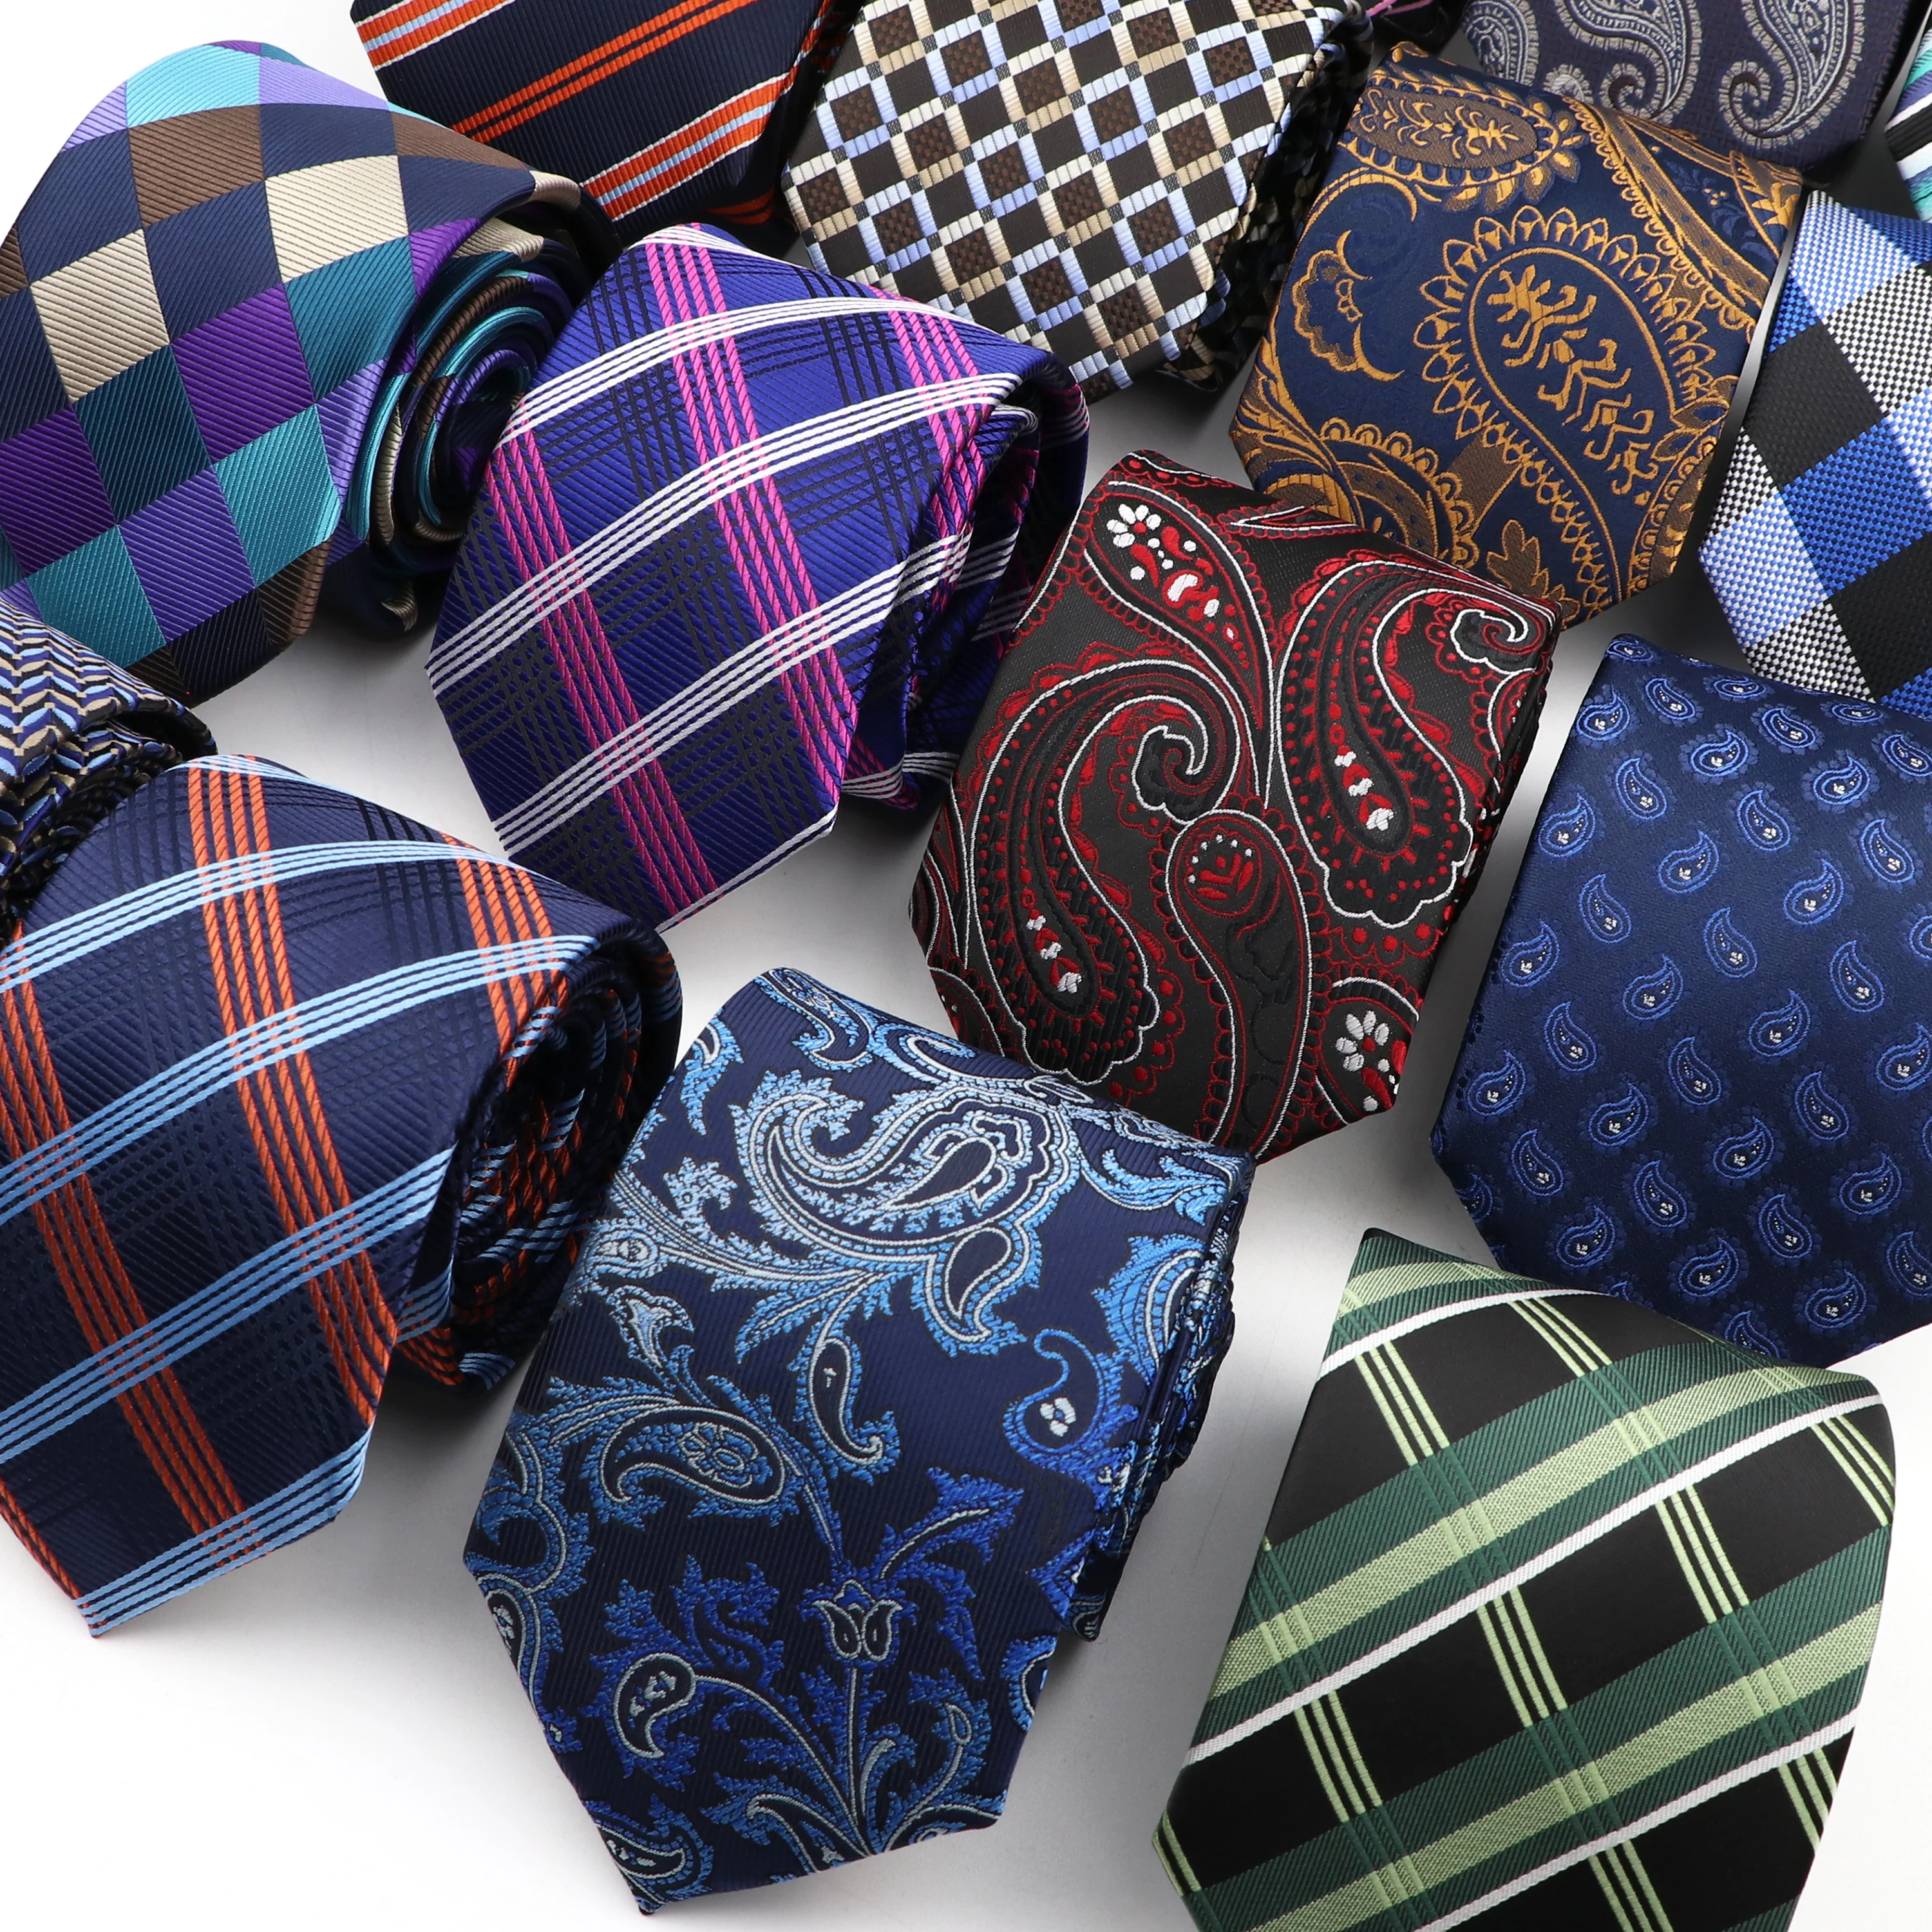 8cm Width Men's Classic Polyester Necktie For Business Meeting Wedding Blue Striped Paisley Jacquard Suits Tie Daily Wear Cravat